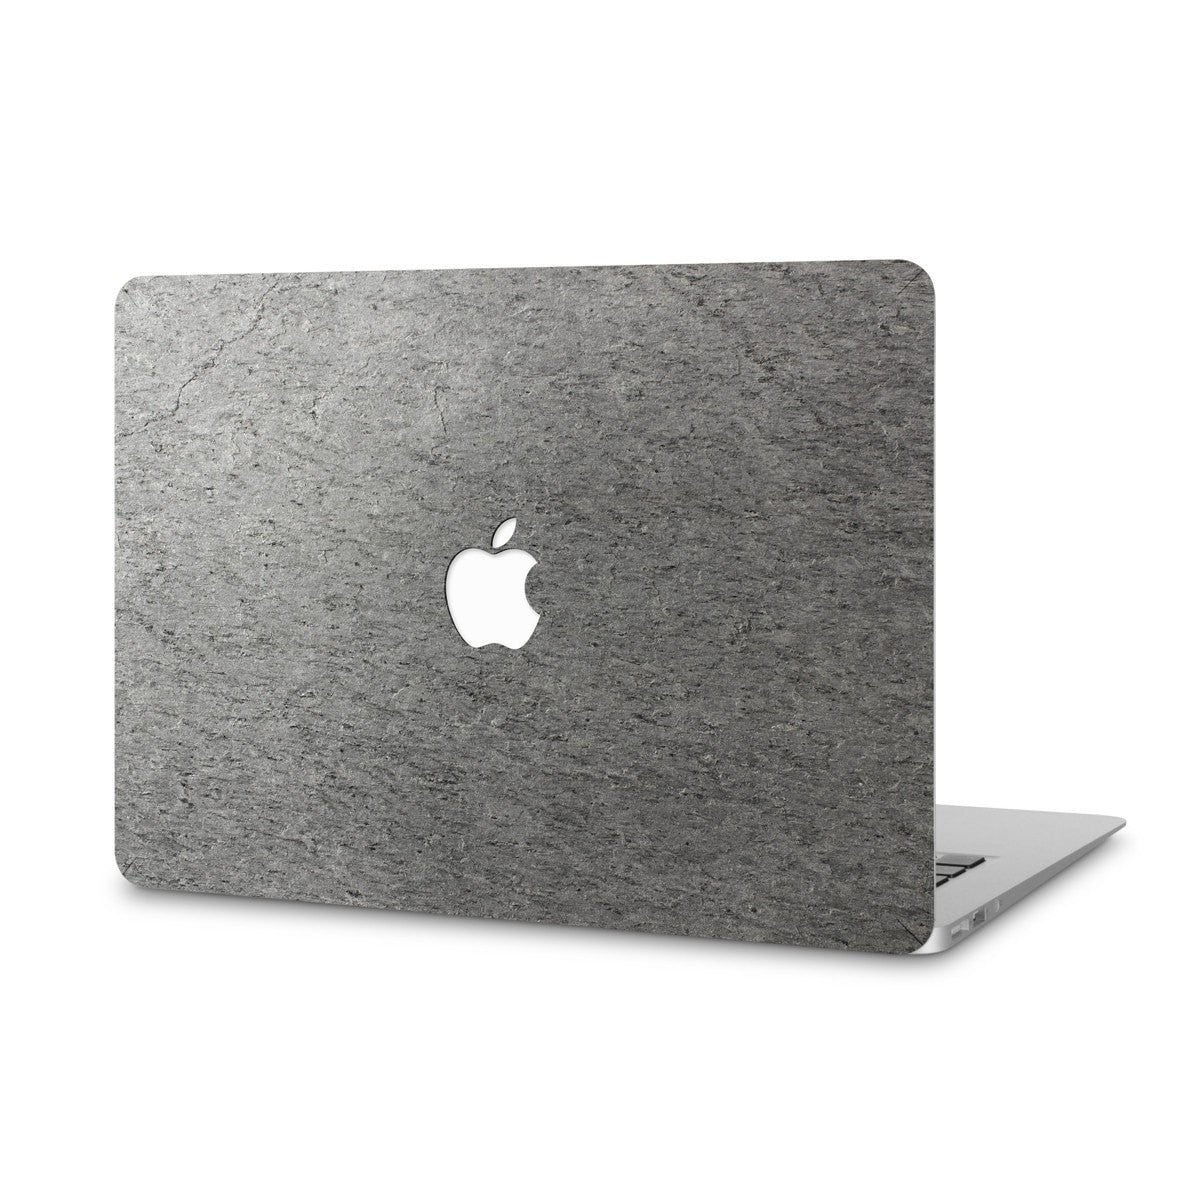 Moonlight MacBook Air 11 Stone Skin - Stone Skins - Cover-Up